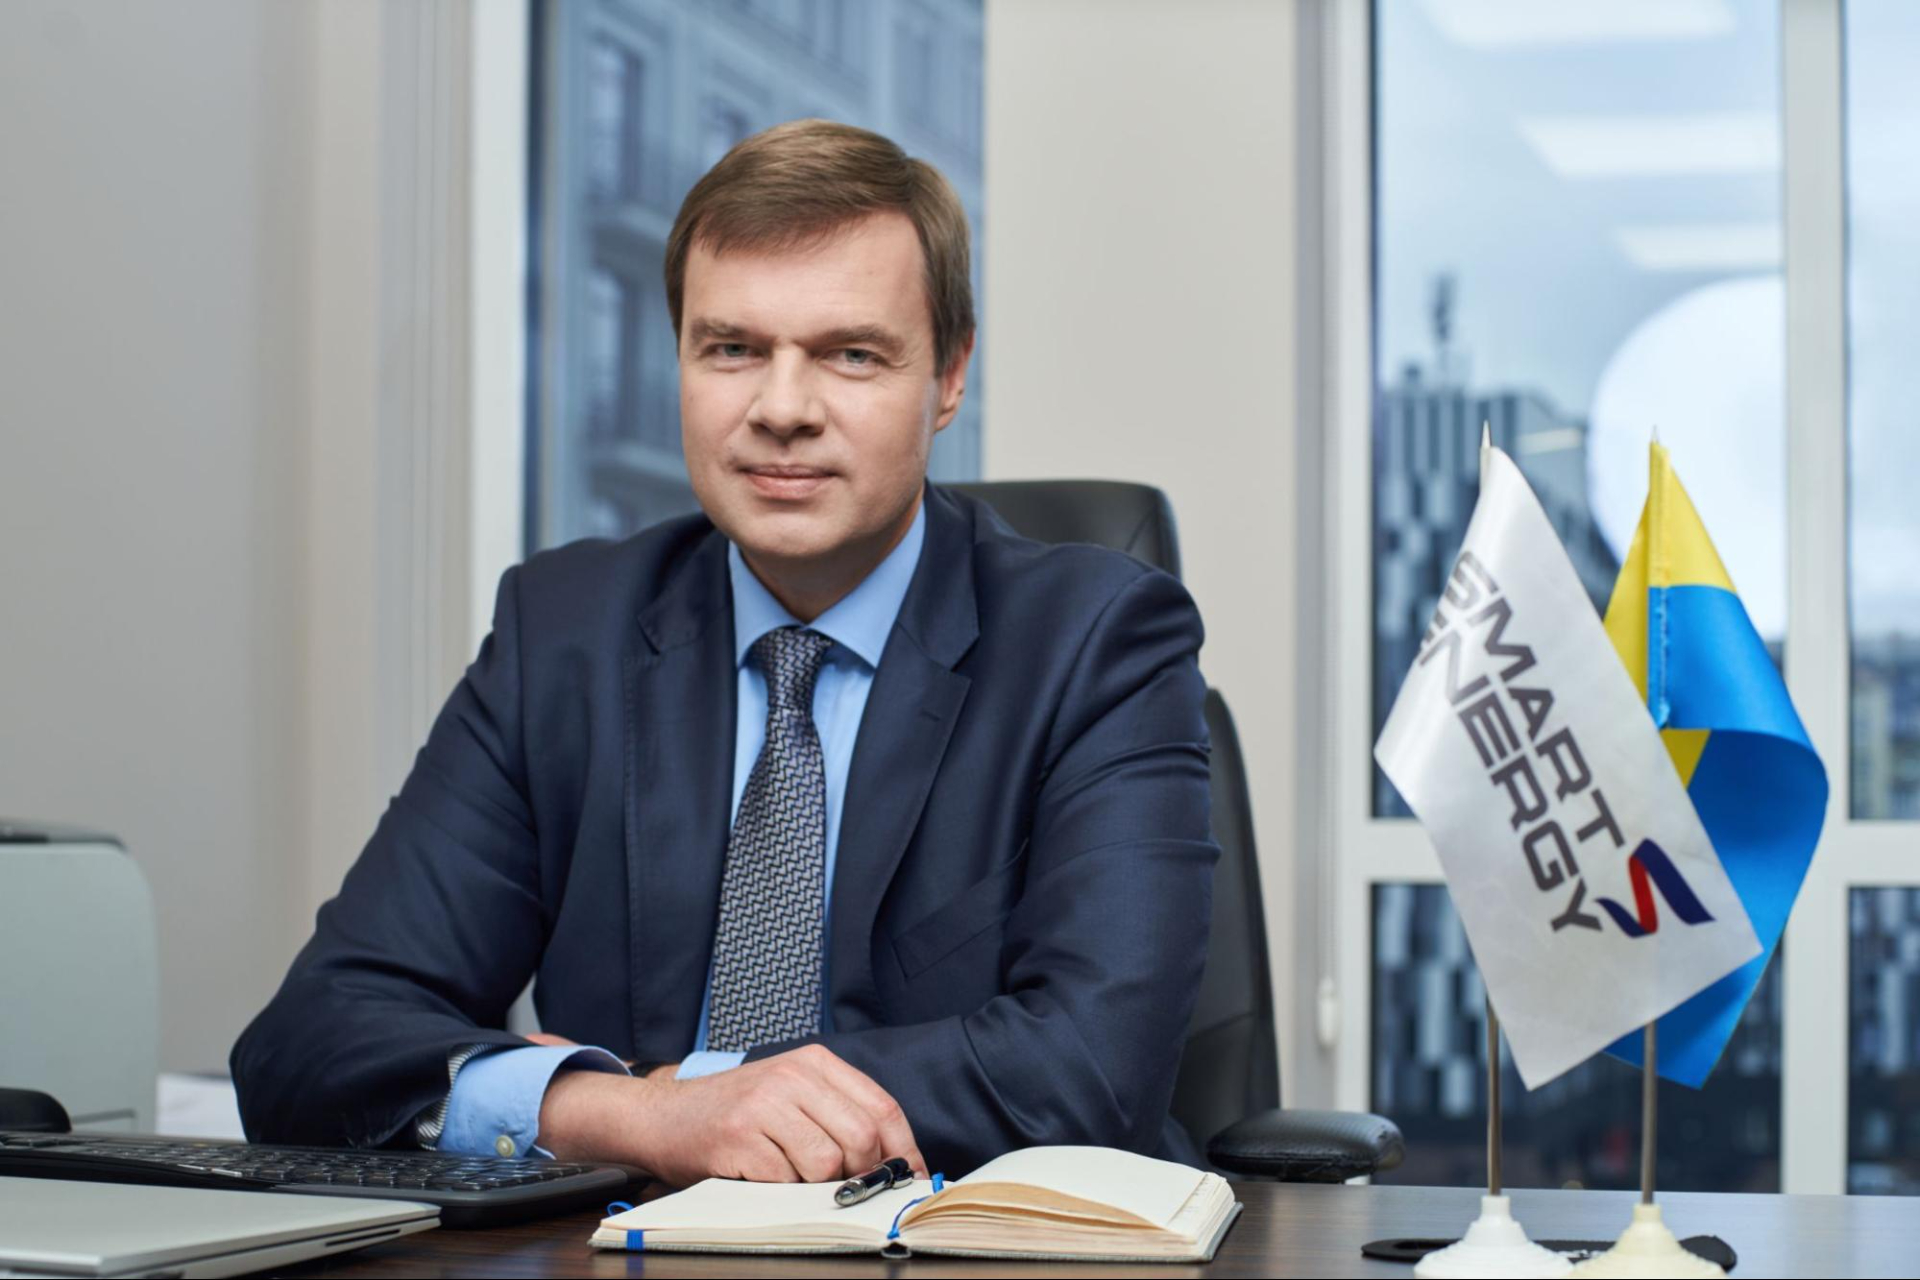 Сергій Глазунов, Генеральний директор групи компаній Smart Energy